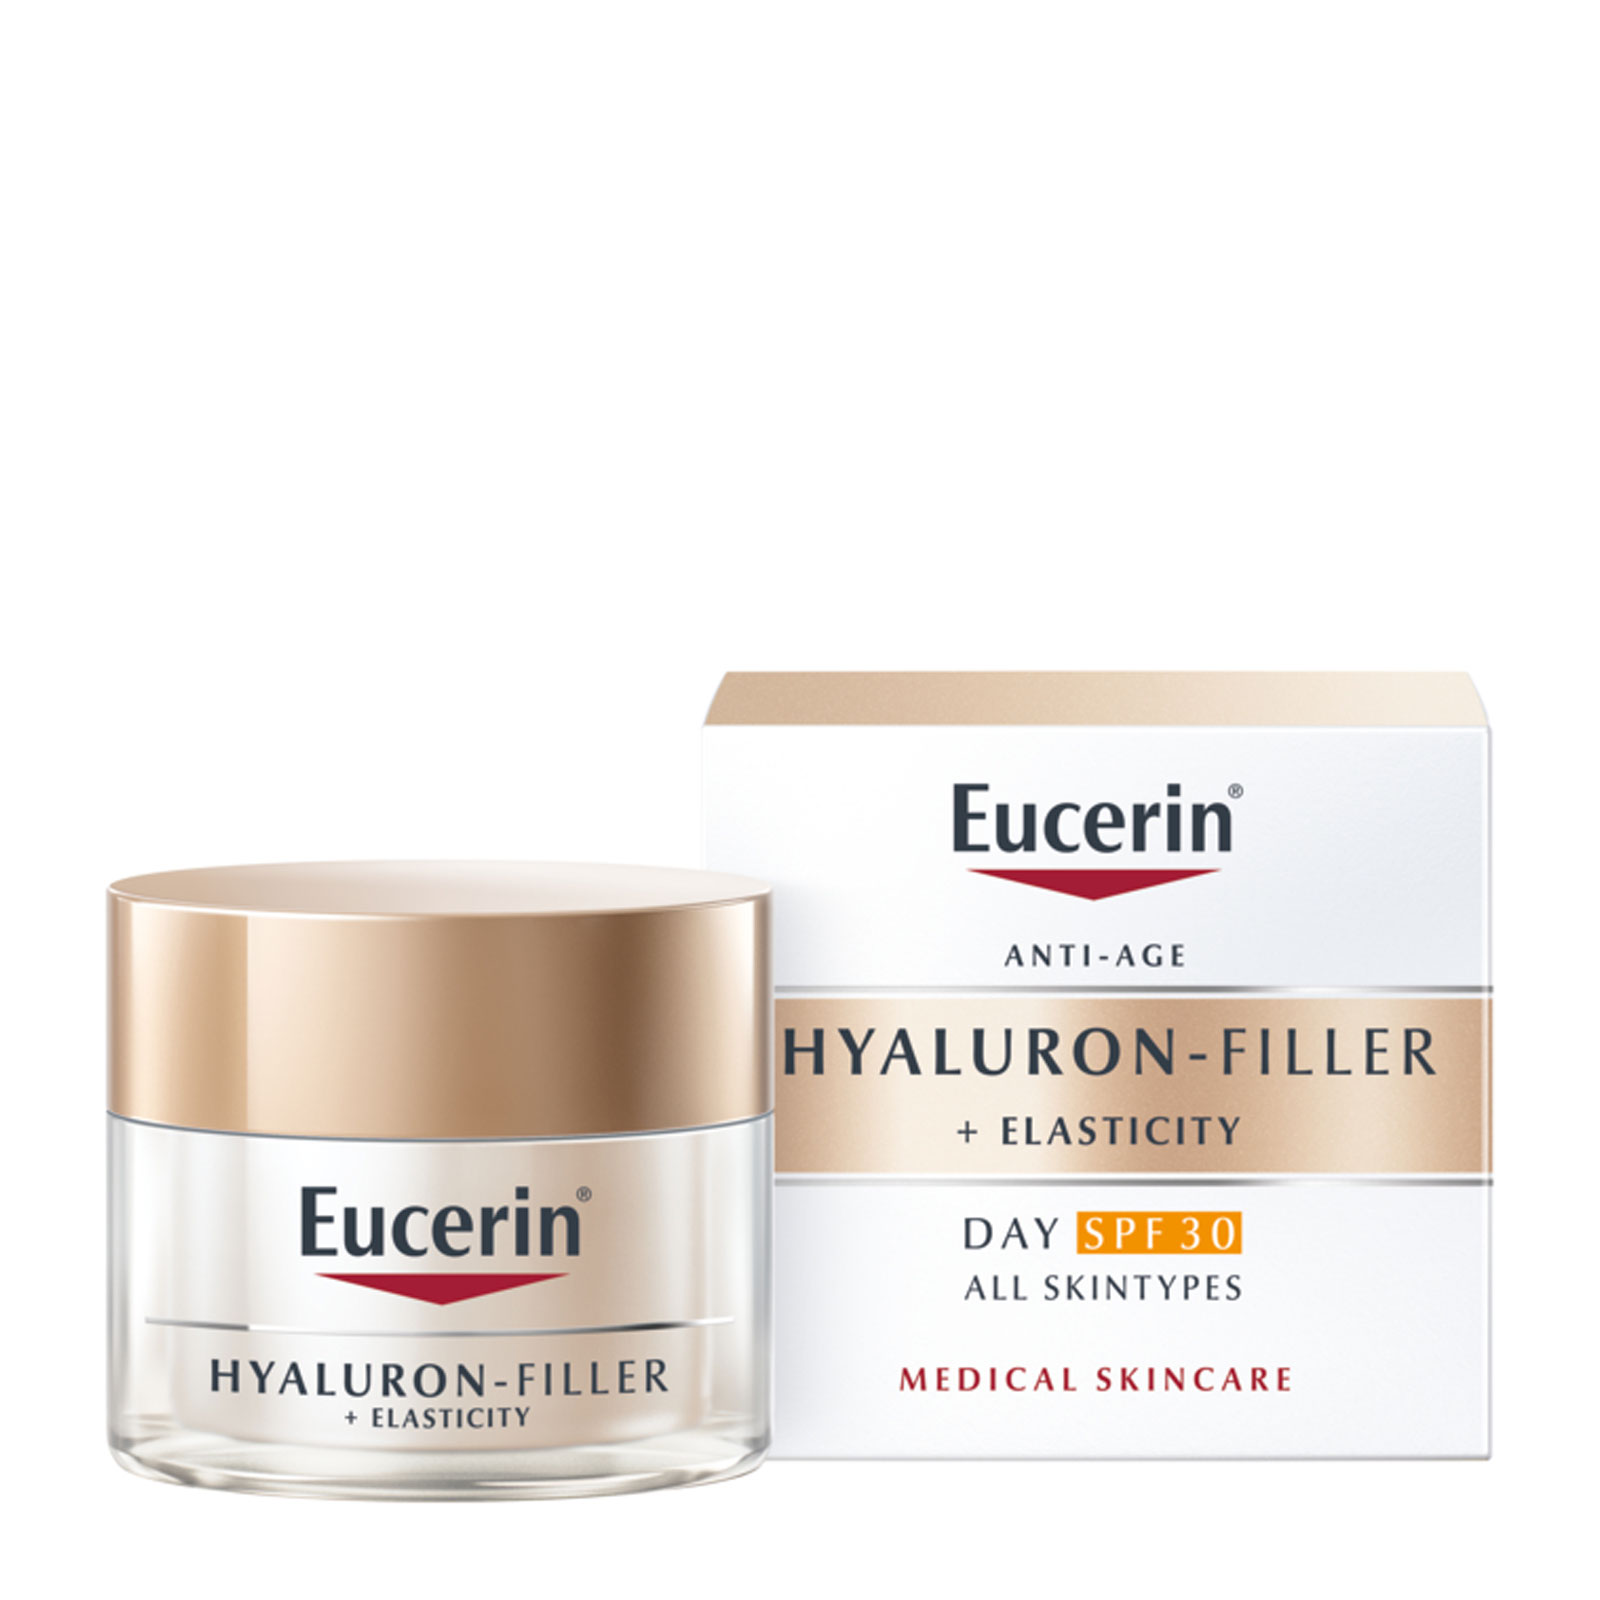 Eucerin Hyaluron-Filler + Elasticity Anti-Aging Day Cream SPF30 50ml